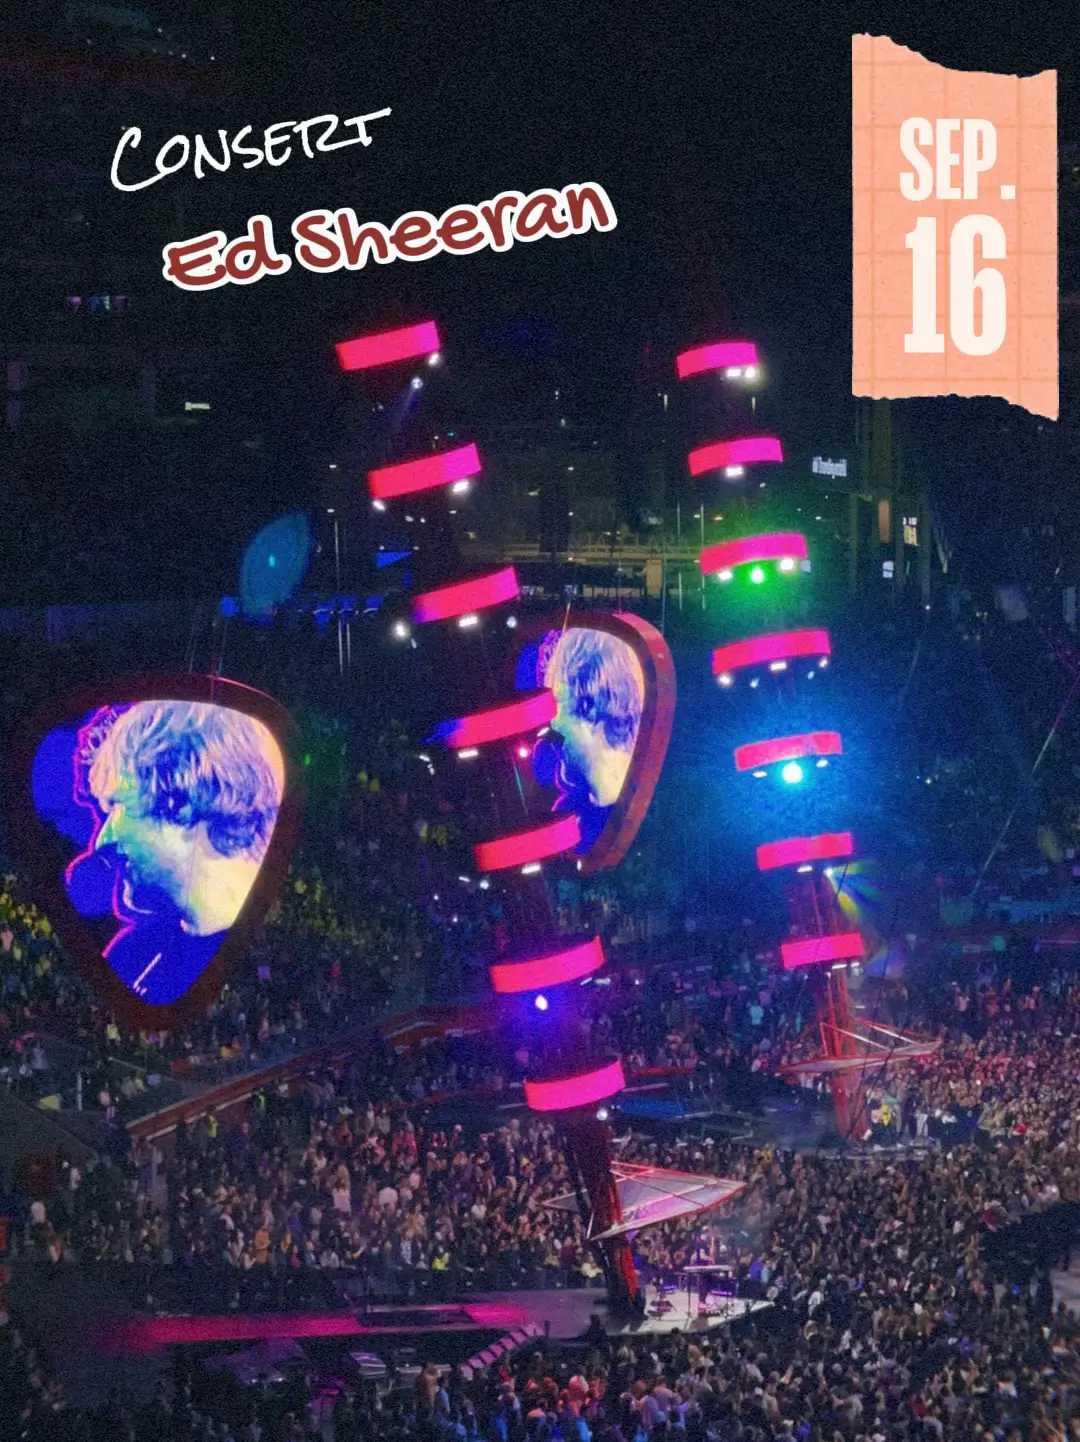 Seeing Ed Sheeran Live's images